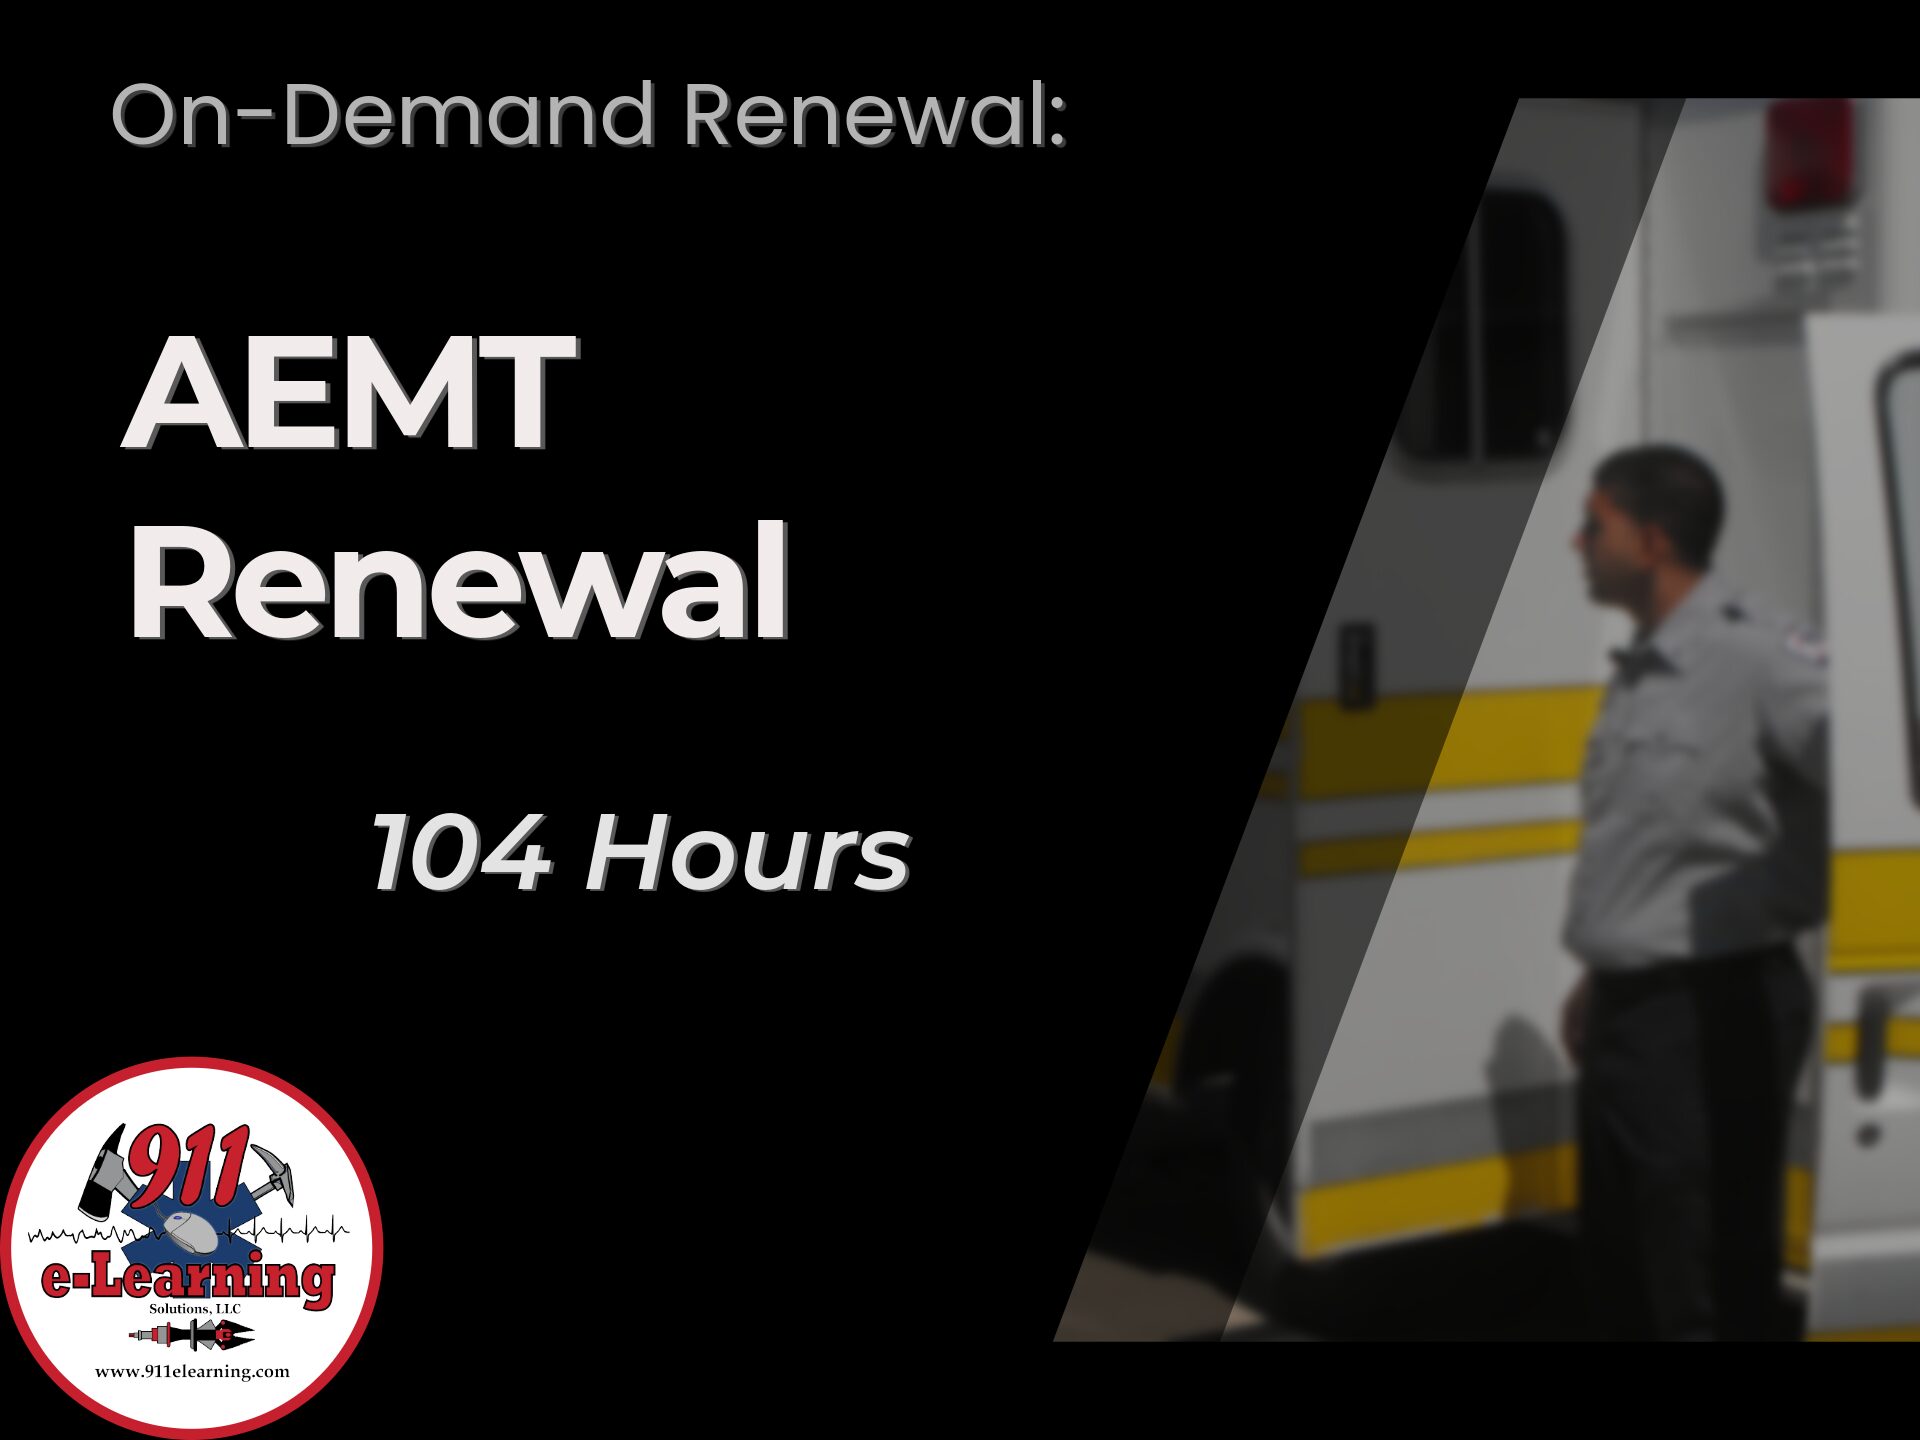 AEMT Renewal | 911 e-Learning Solutions LLC